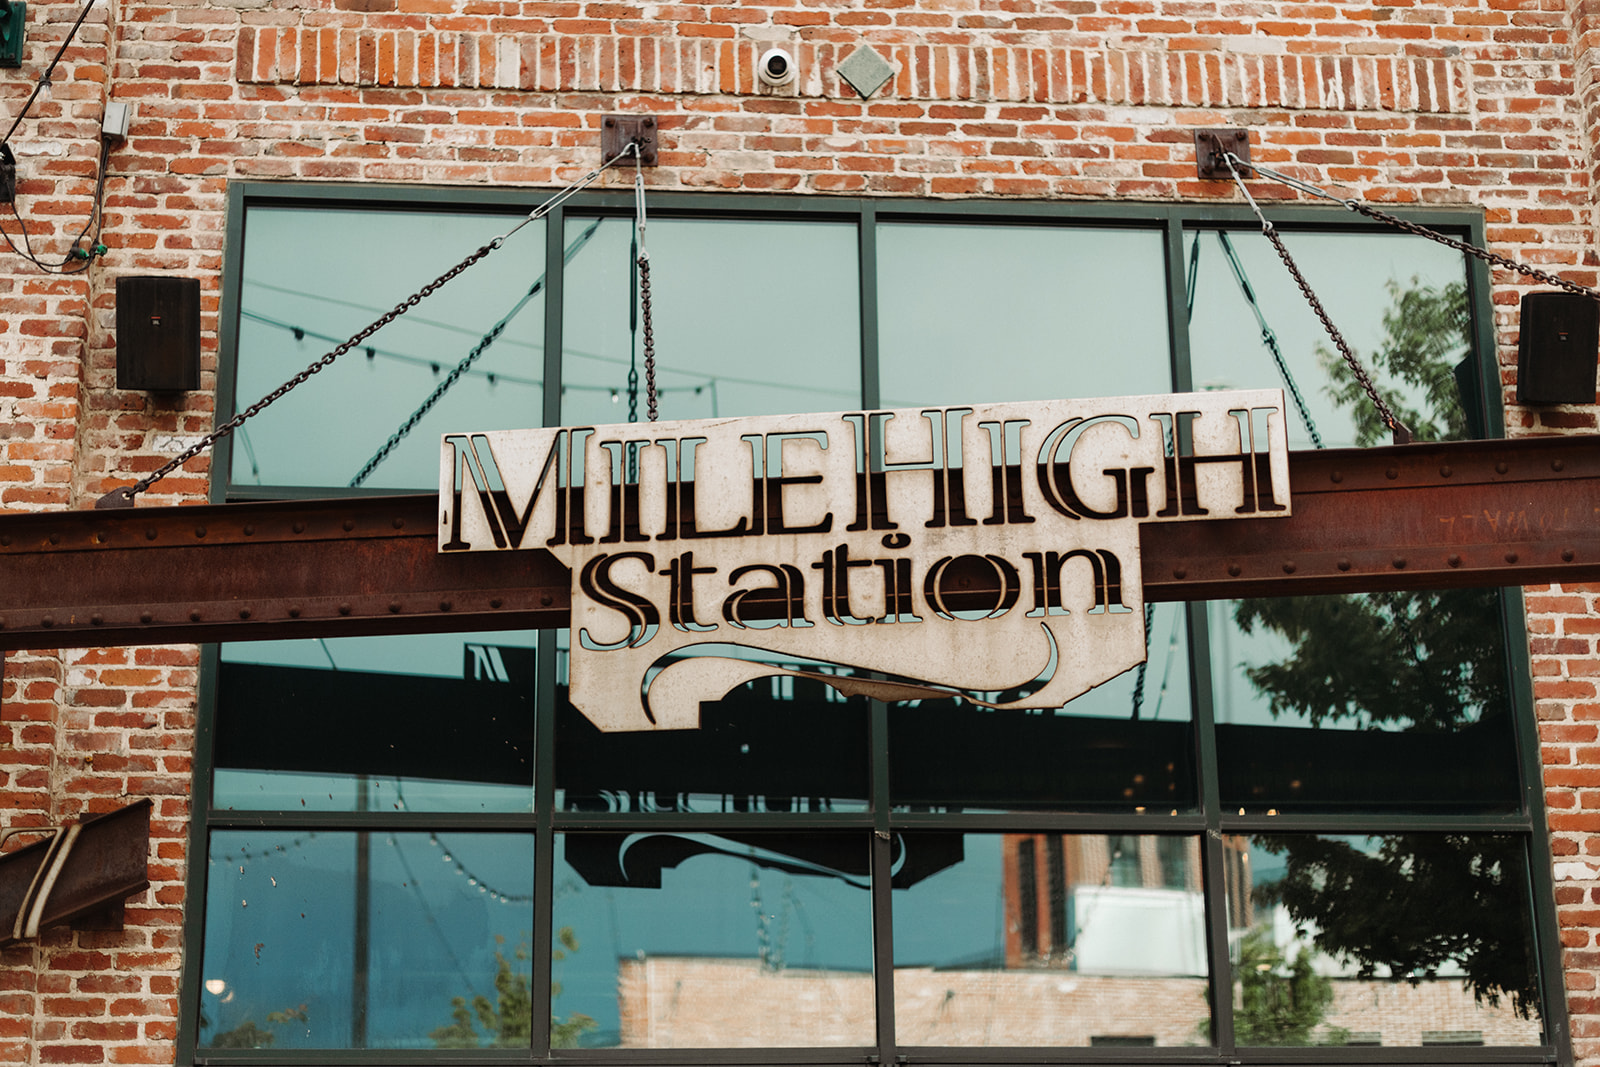 The Mile High Station sign rests above a huge window at this Denver wedding venue.